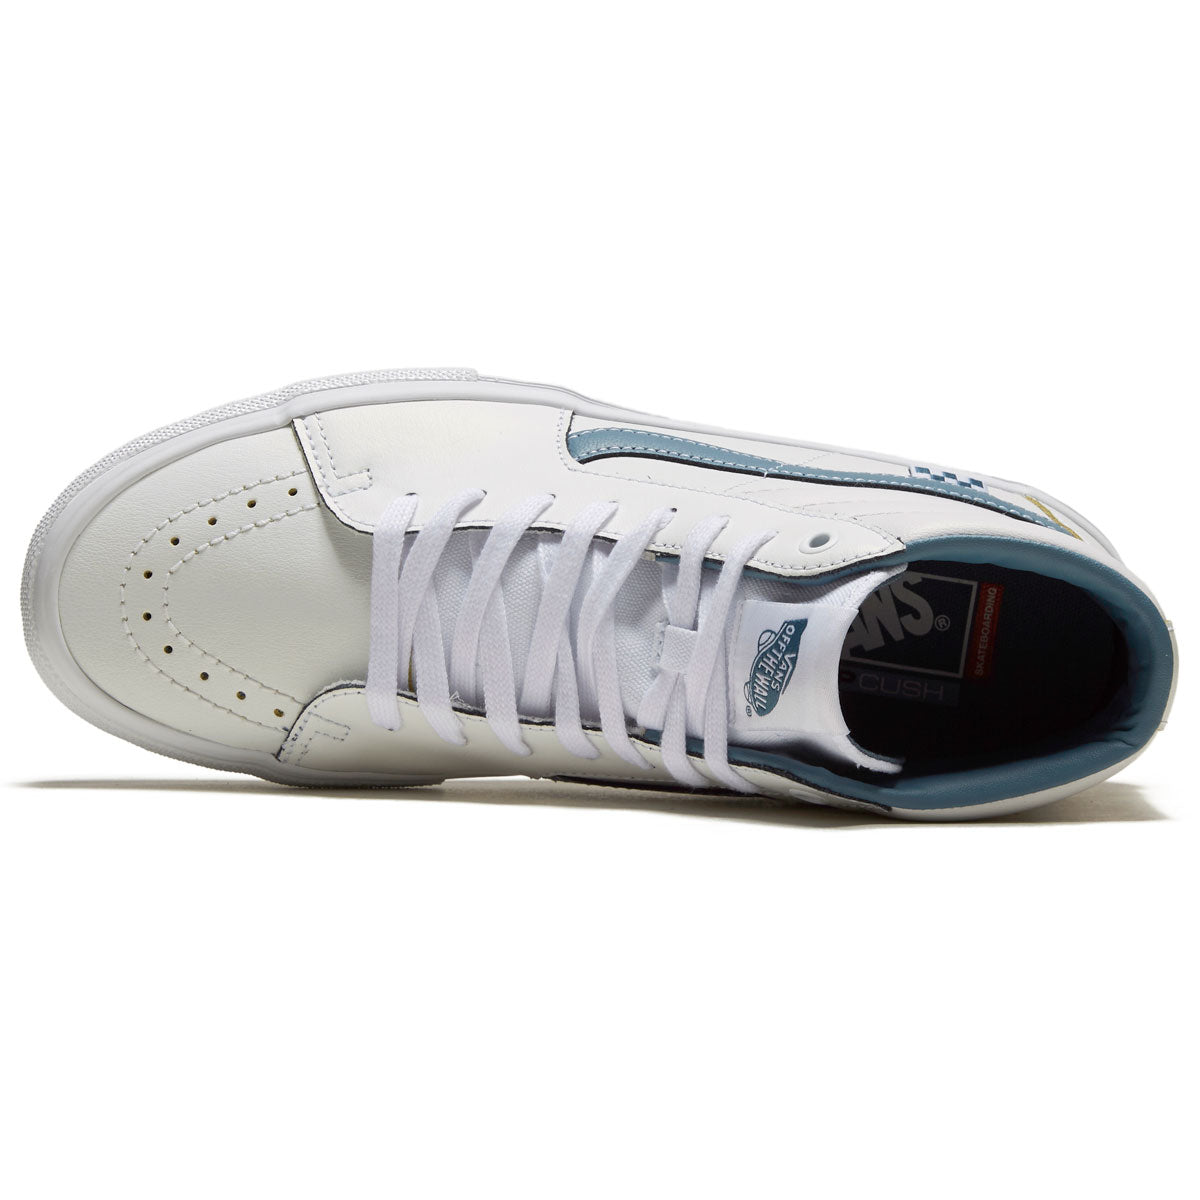 Vans Skate Sk8-hi Shoes - Slushie White/Blue image 3